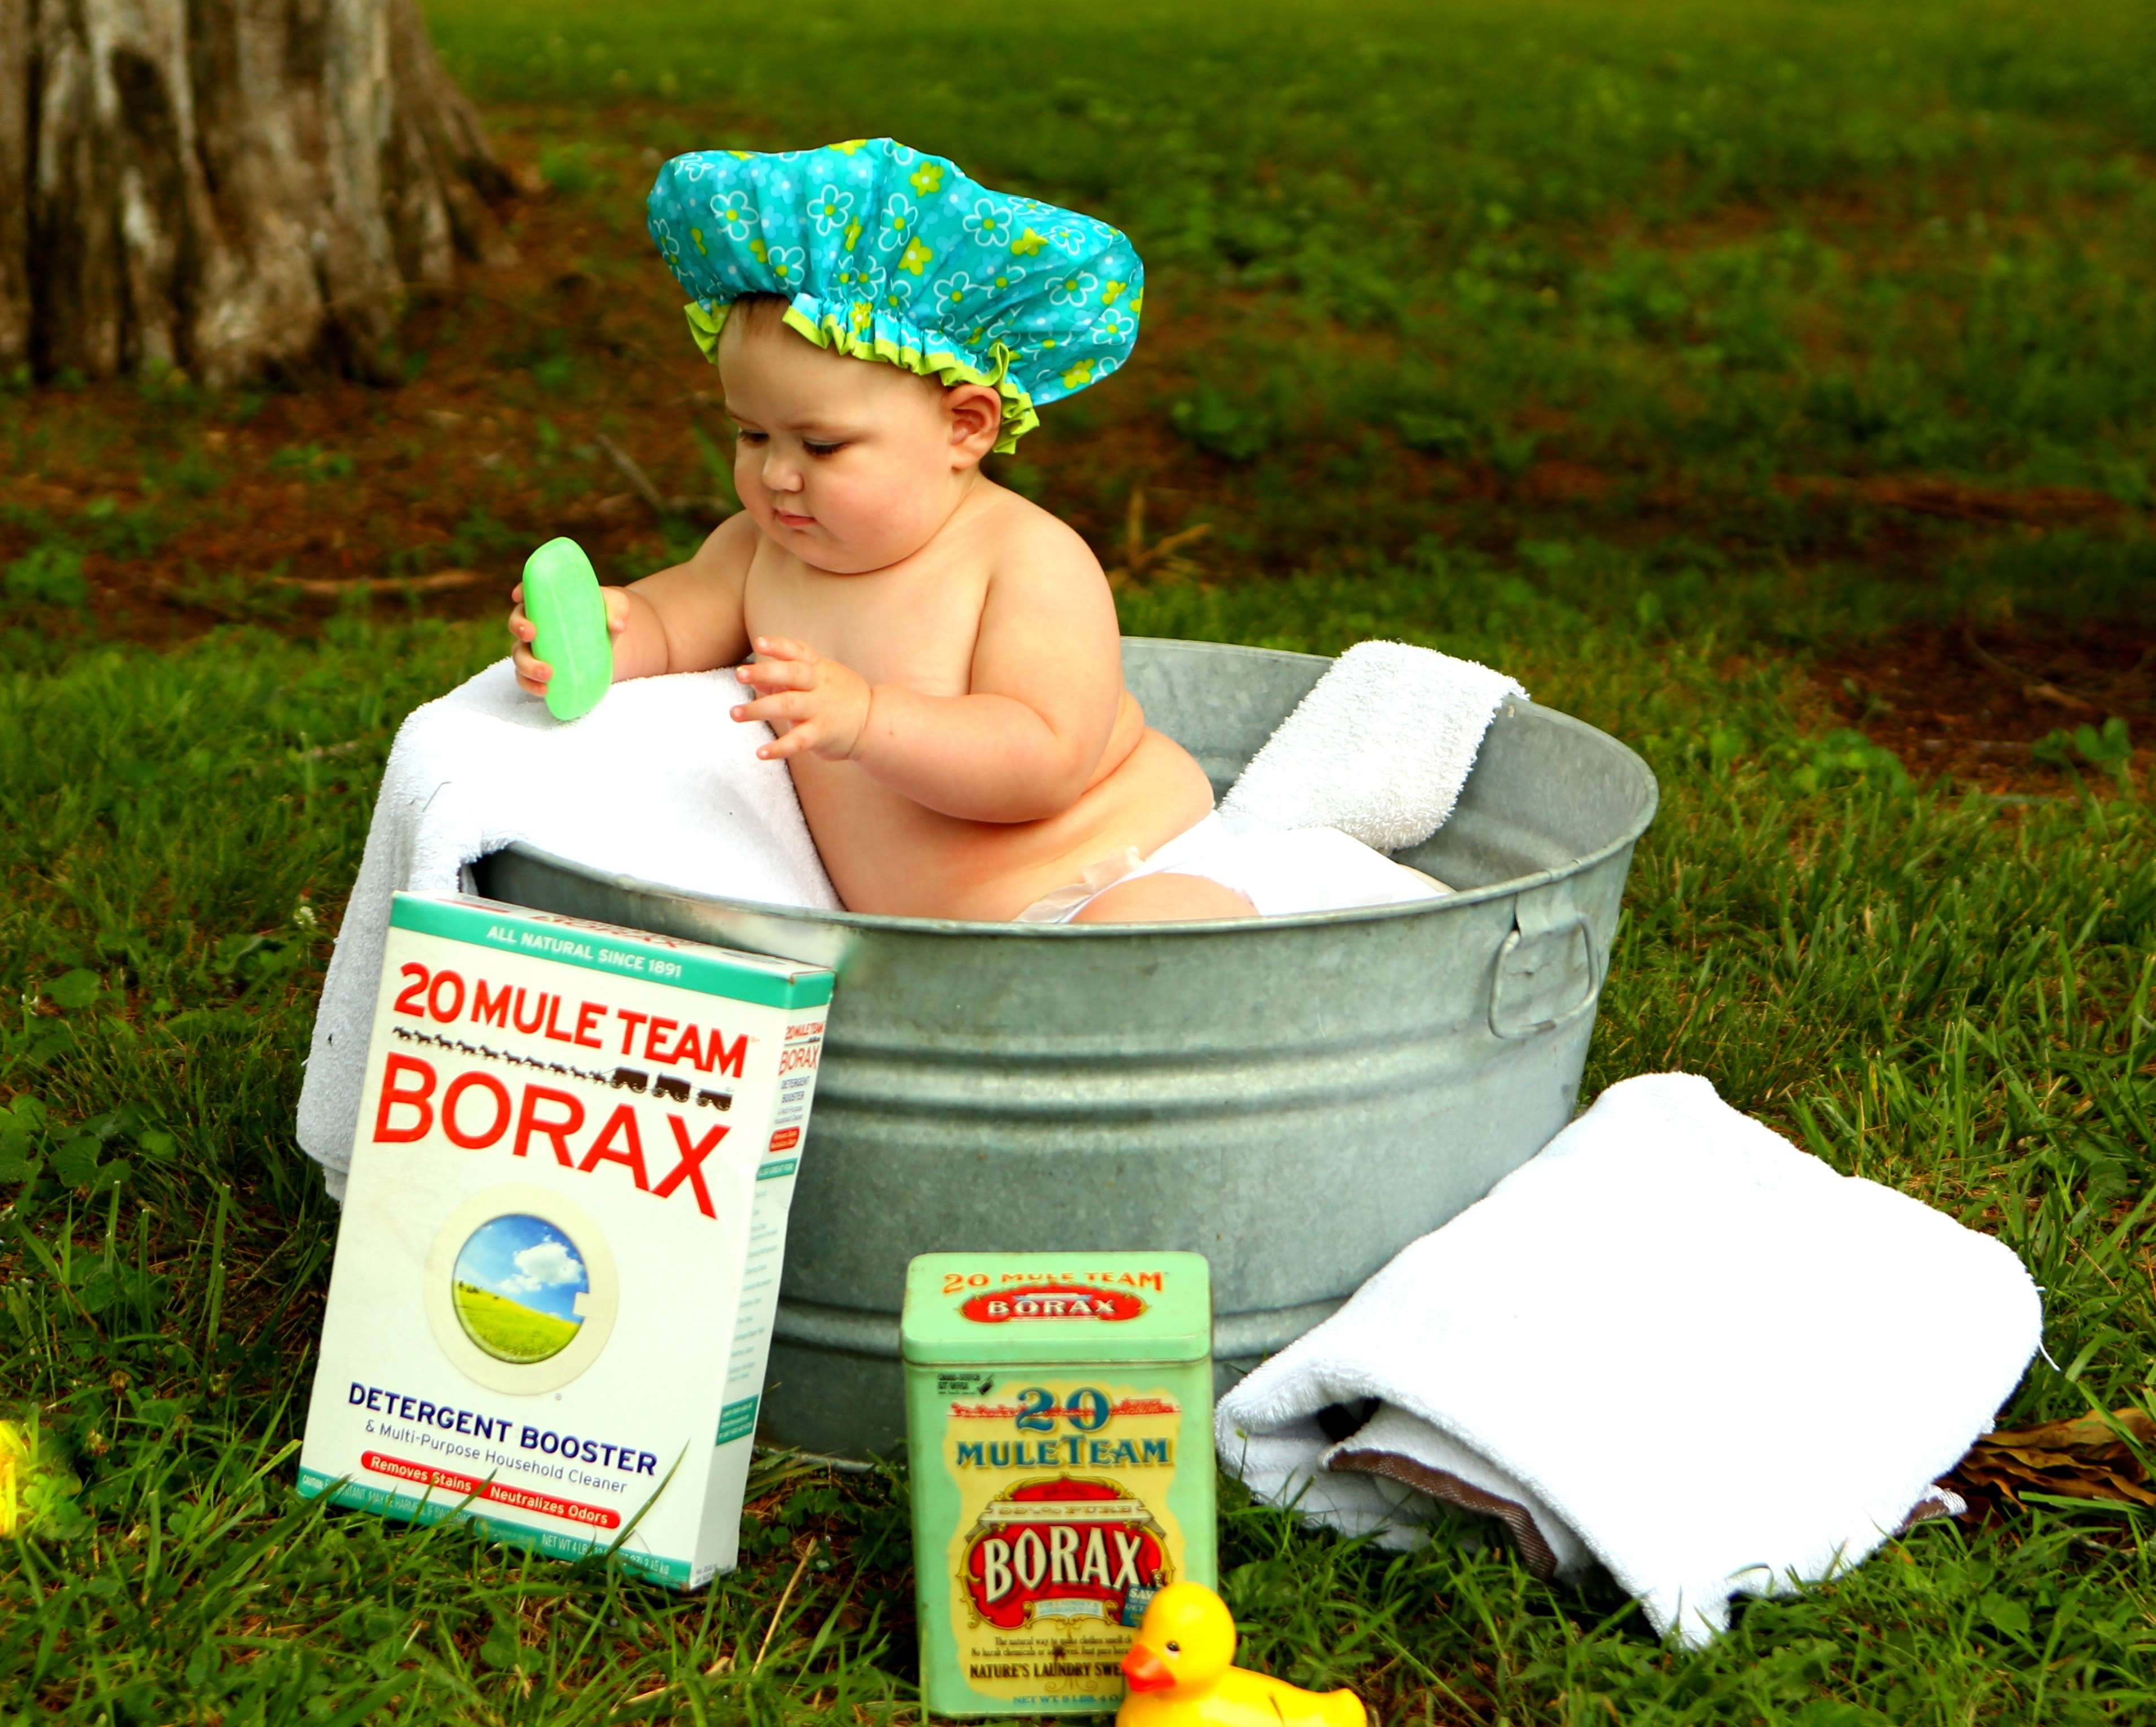 Shirtless Baby Boy in Galvanized Tub, Adorable, Grass, Washing, Toddler, HQ Photo